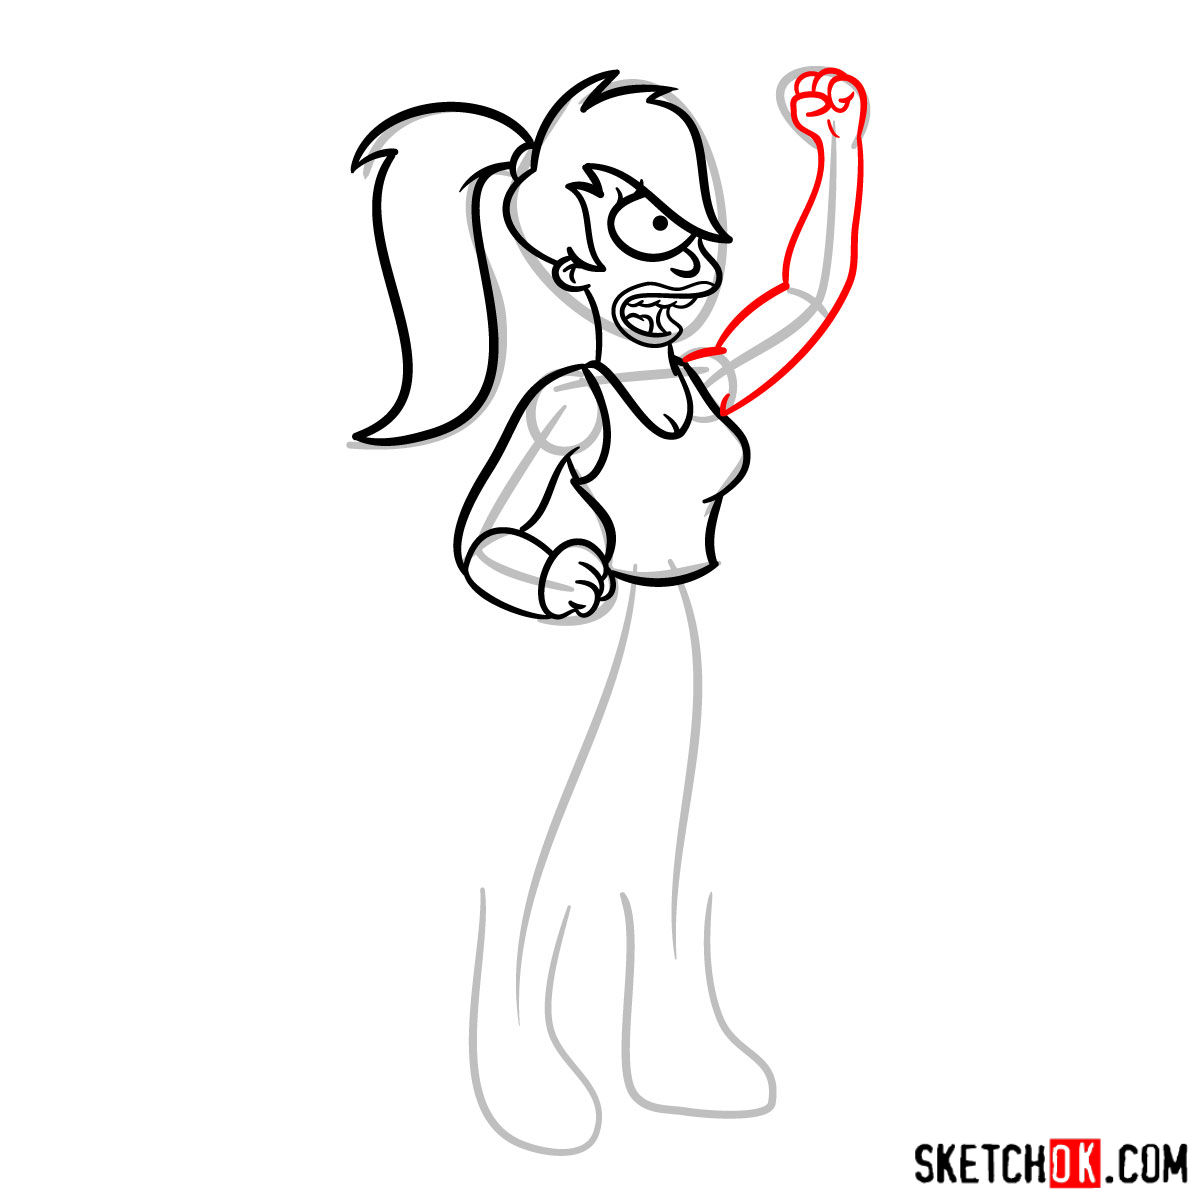 How to draw Leela from Futurama - step 09